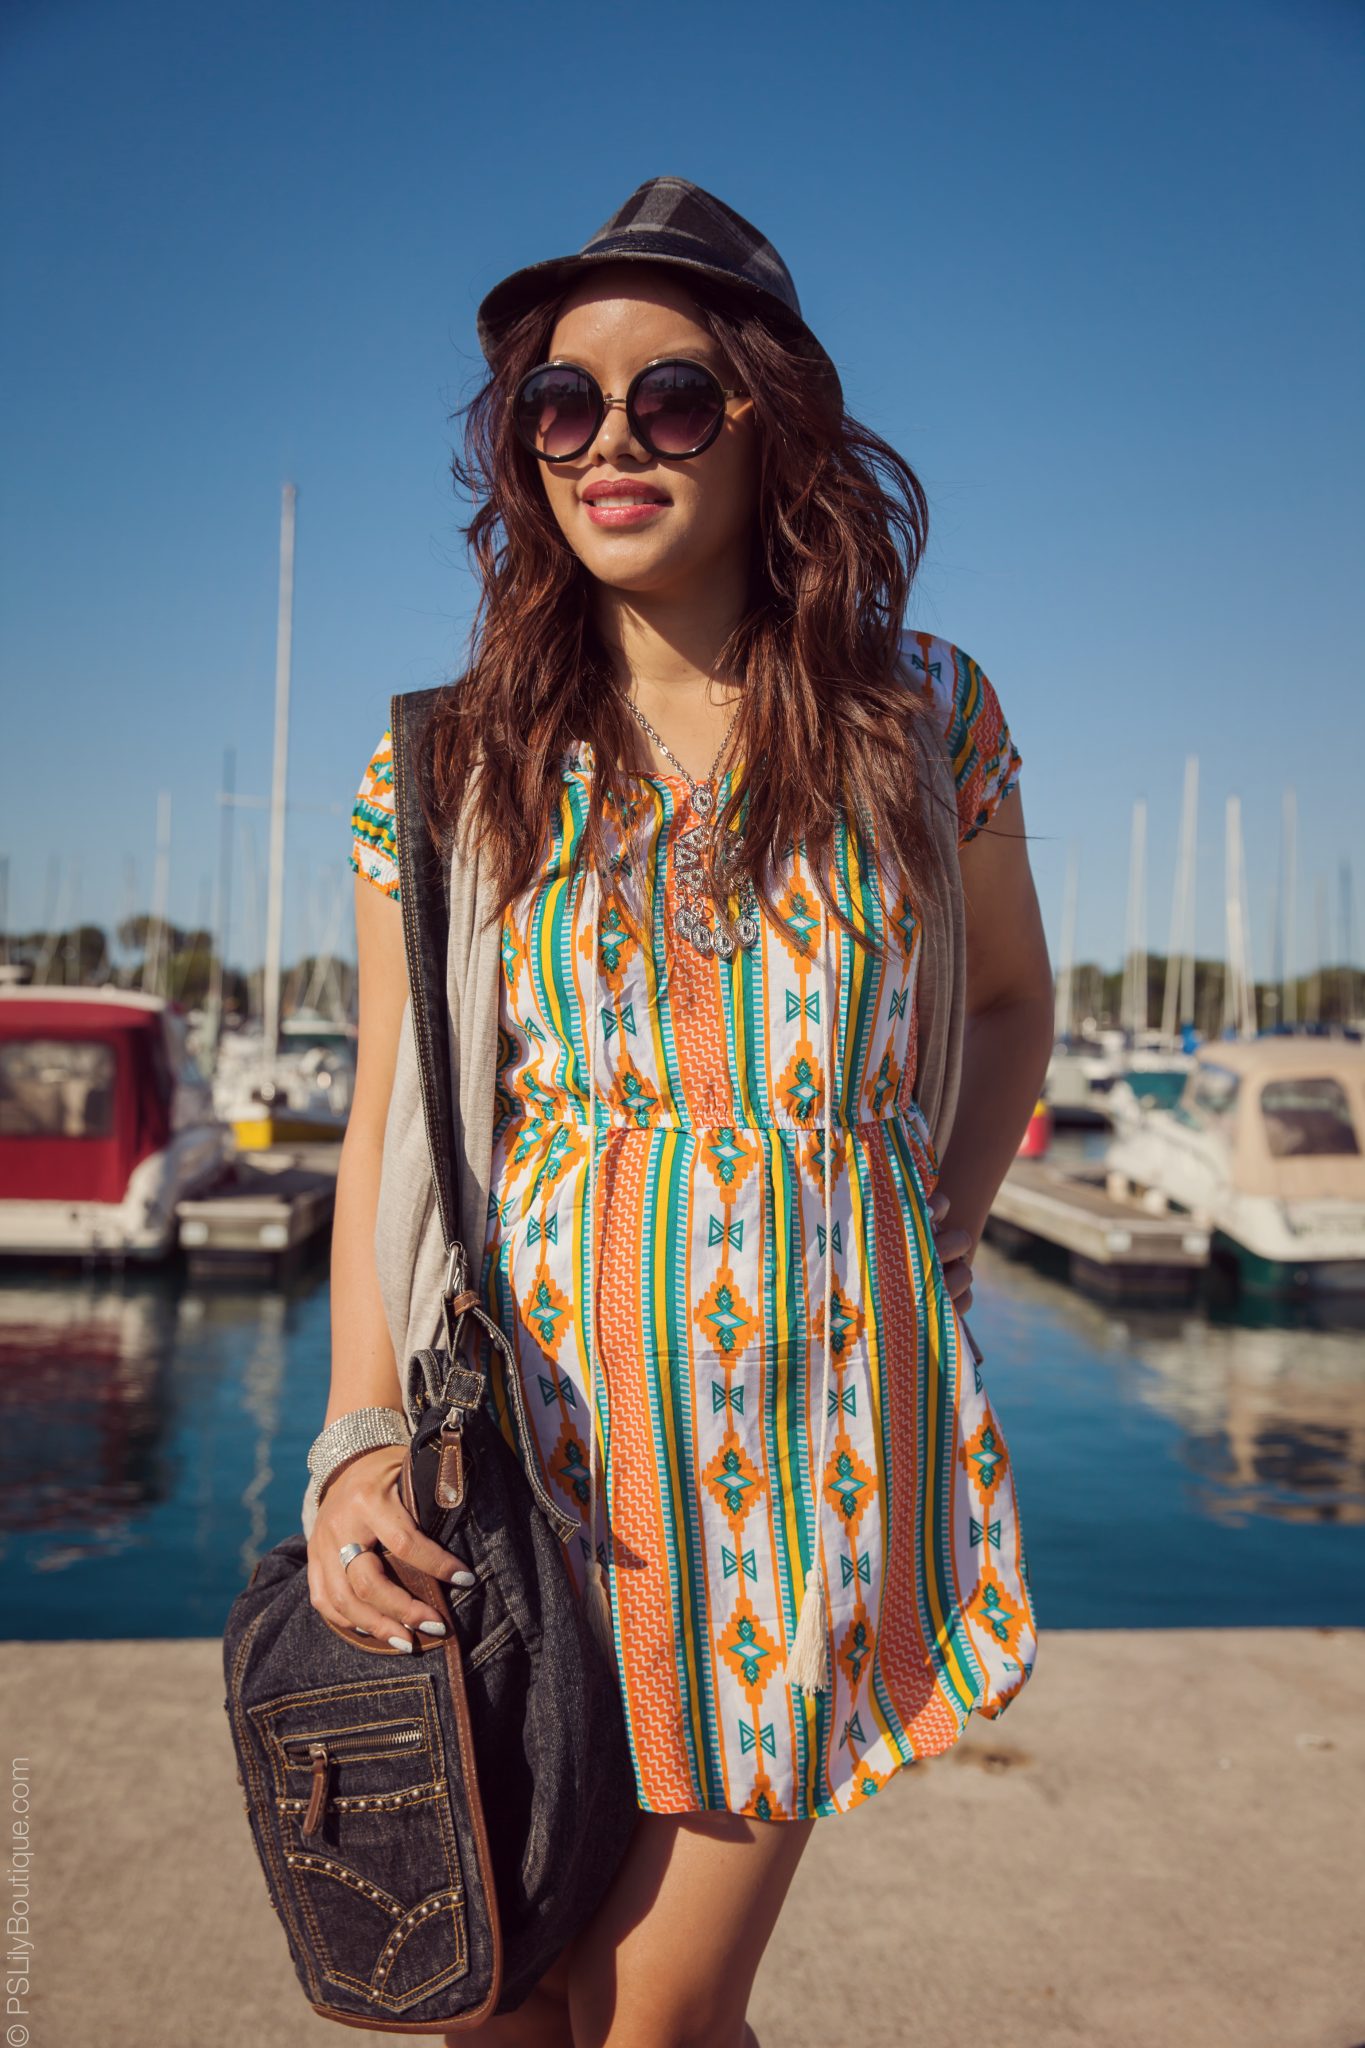 insta-pslilyboutique-los-angeles-fashion-blogger-chicago-boat-slip-5th-&-love-dress-08-17-15